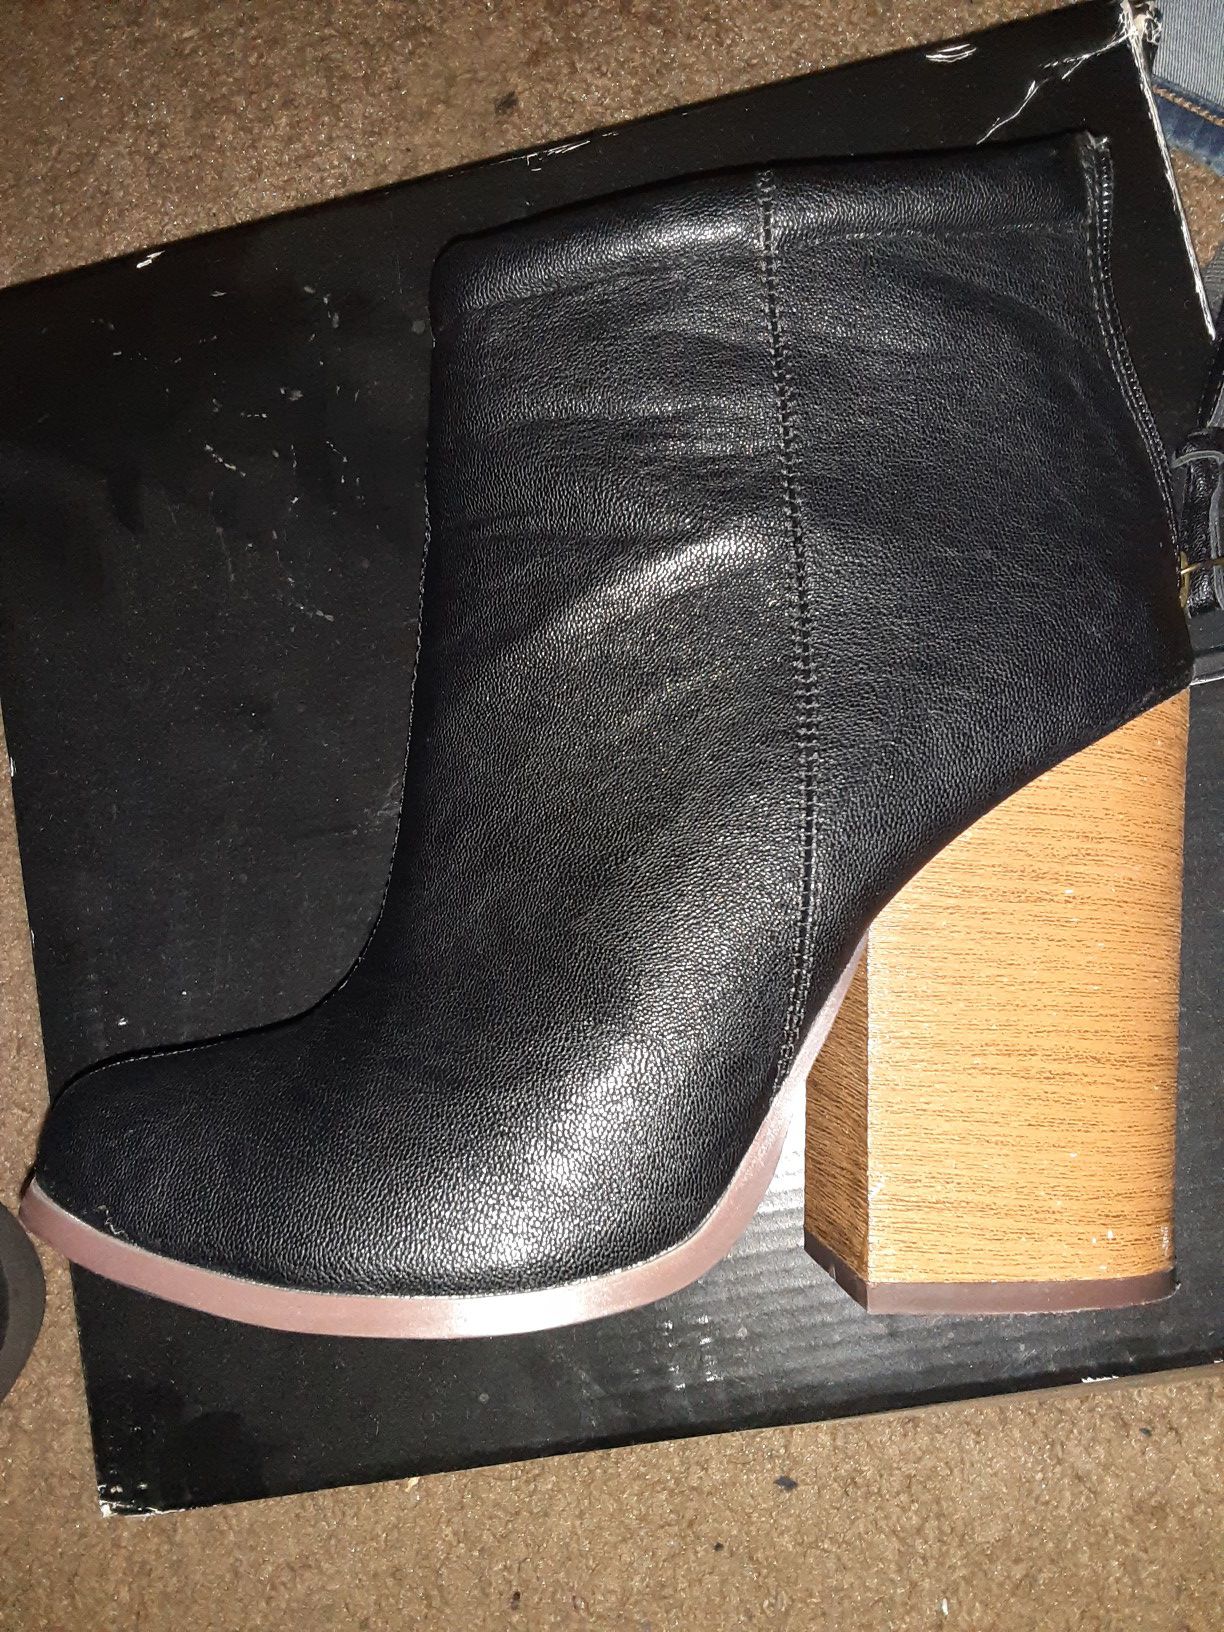 Torrid black boots